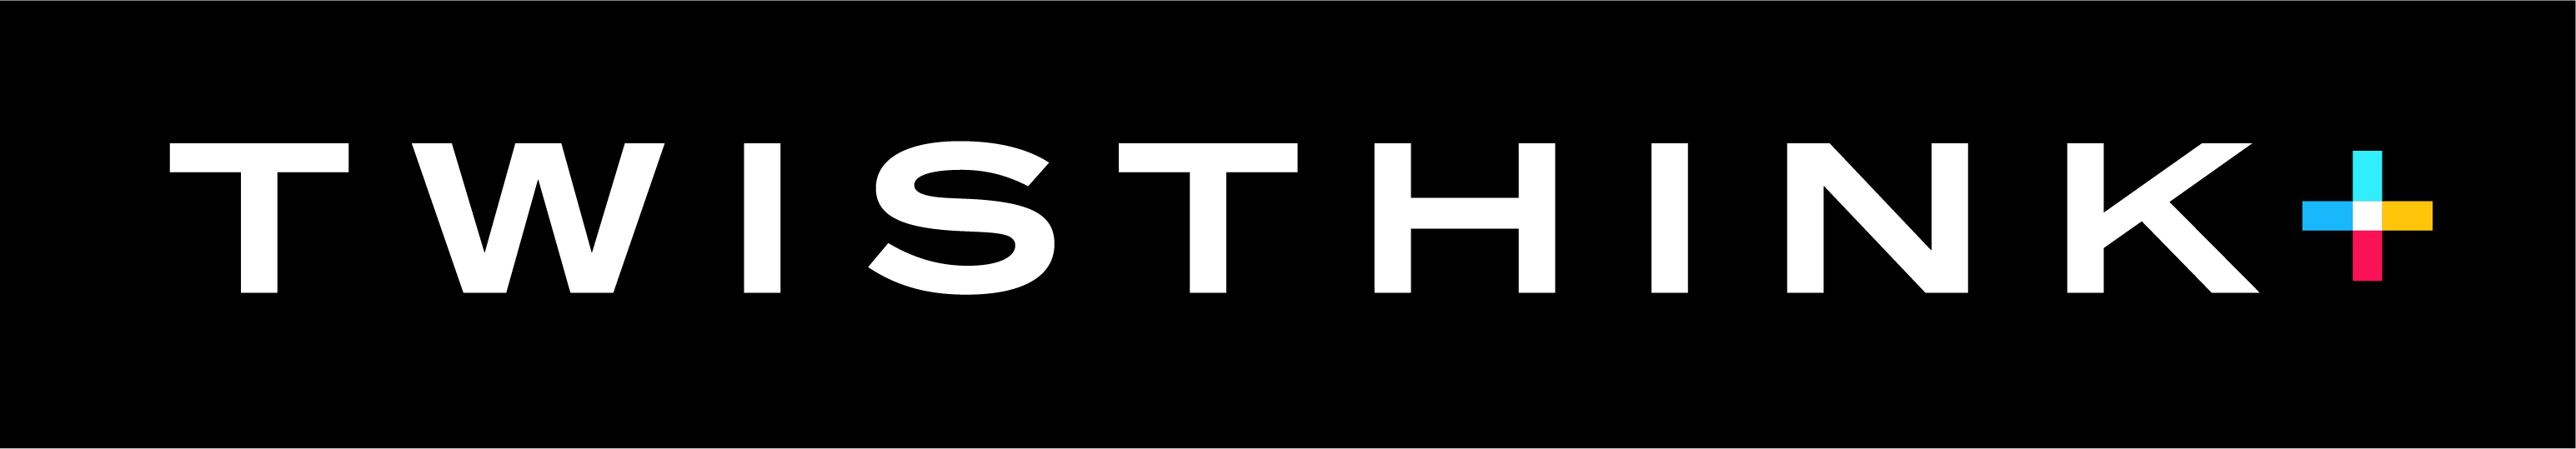 TWISTHINK_Logo_On Black Box (2)